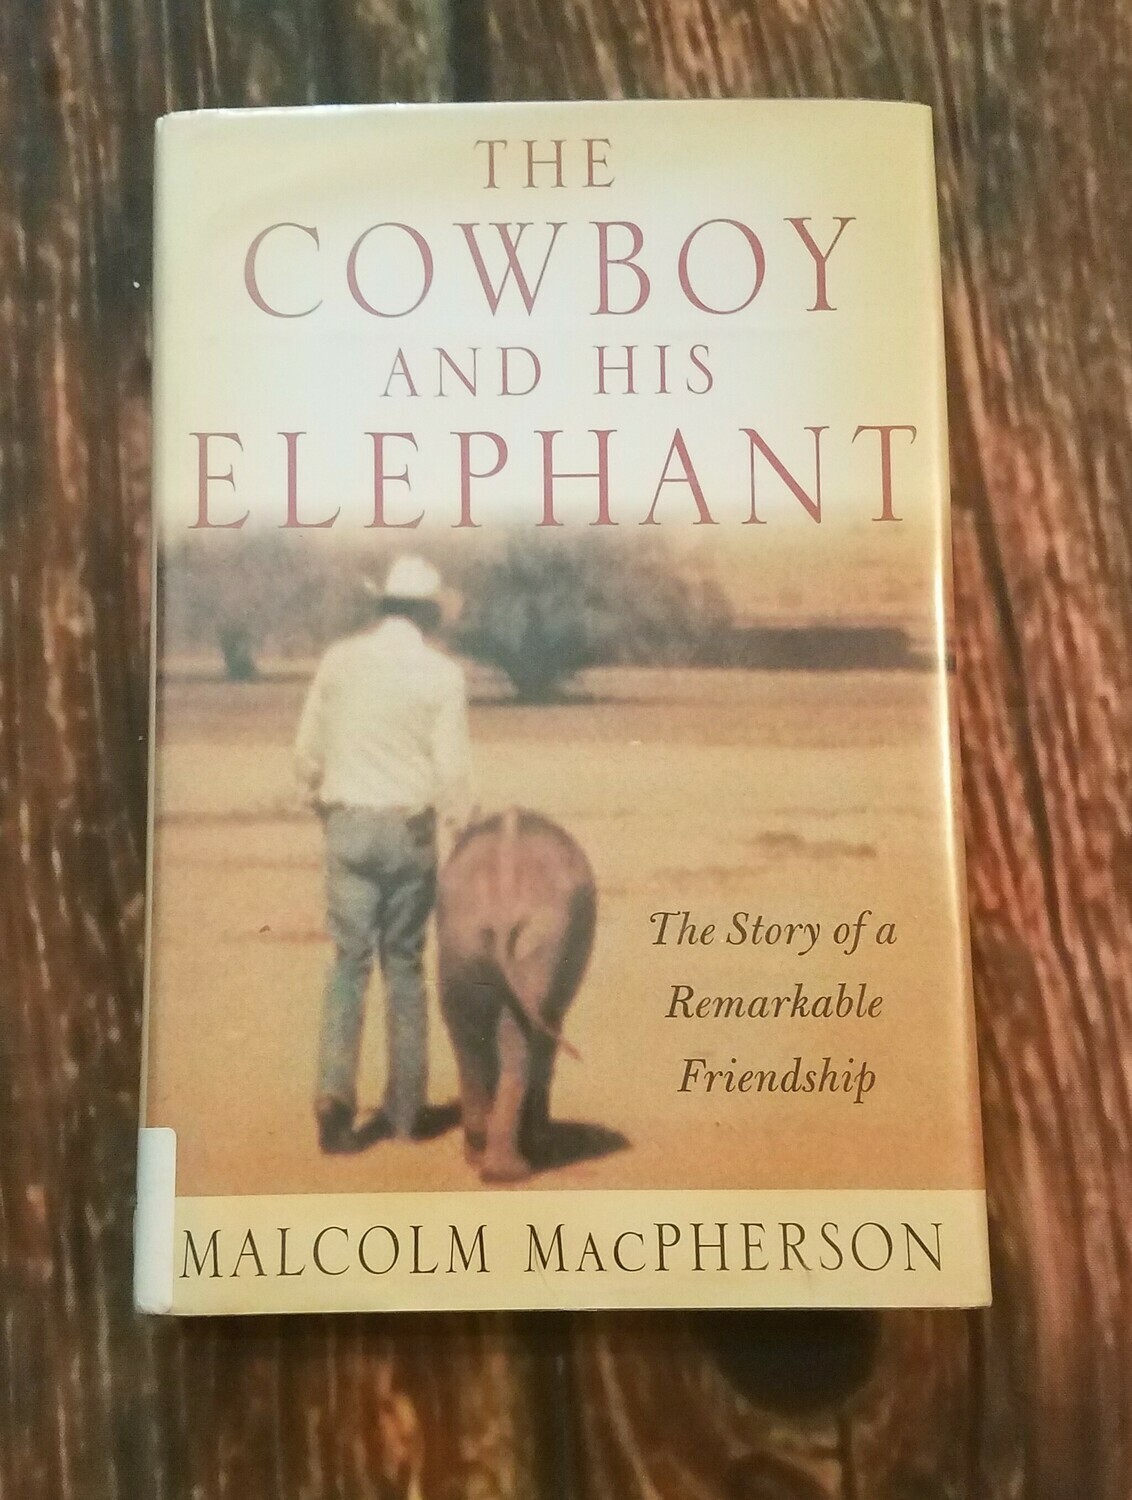 The Cowboy and His Elephant by Malcom MacPherson - Hardback Edition